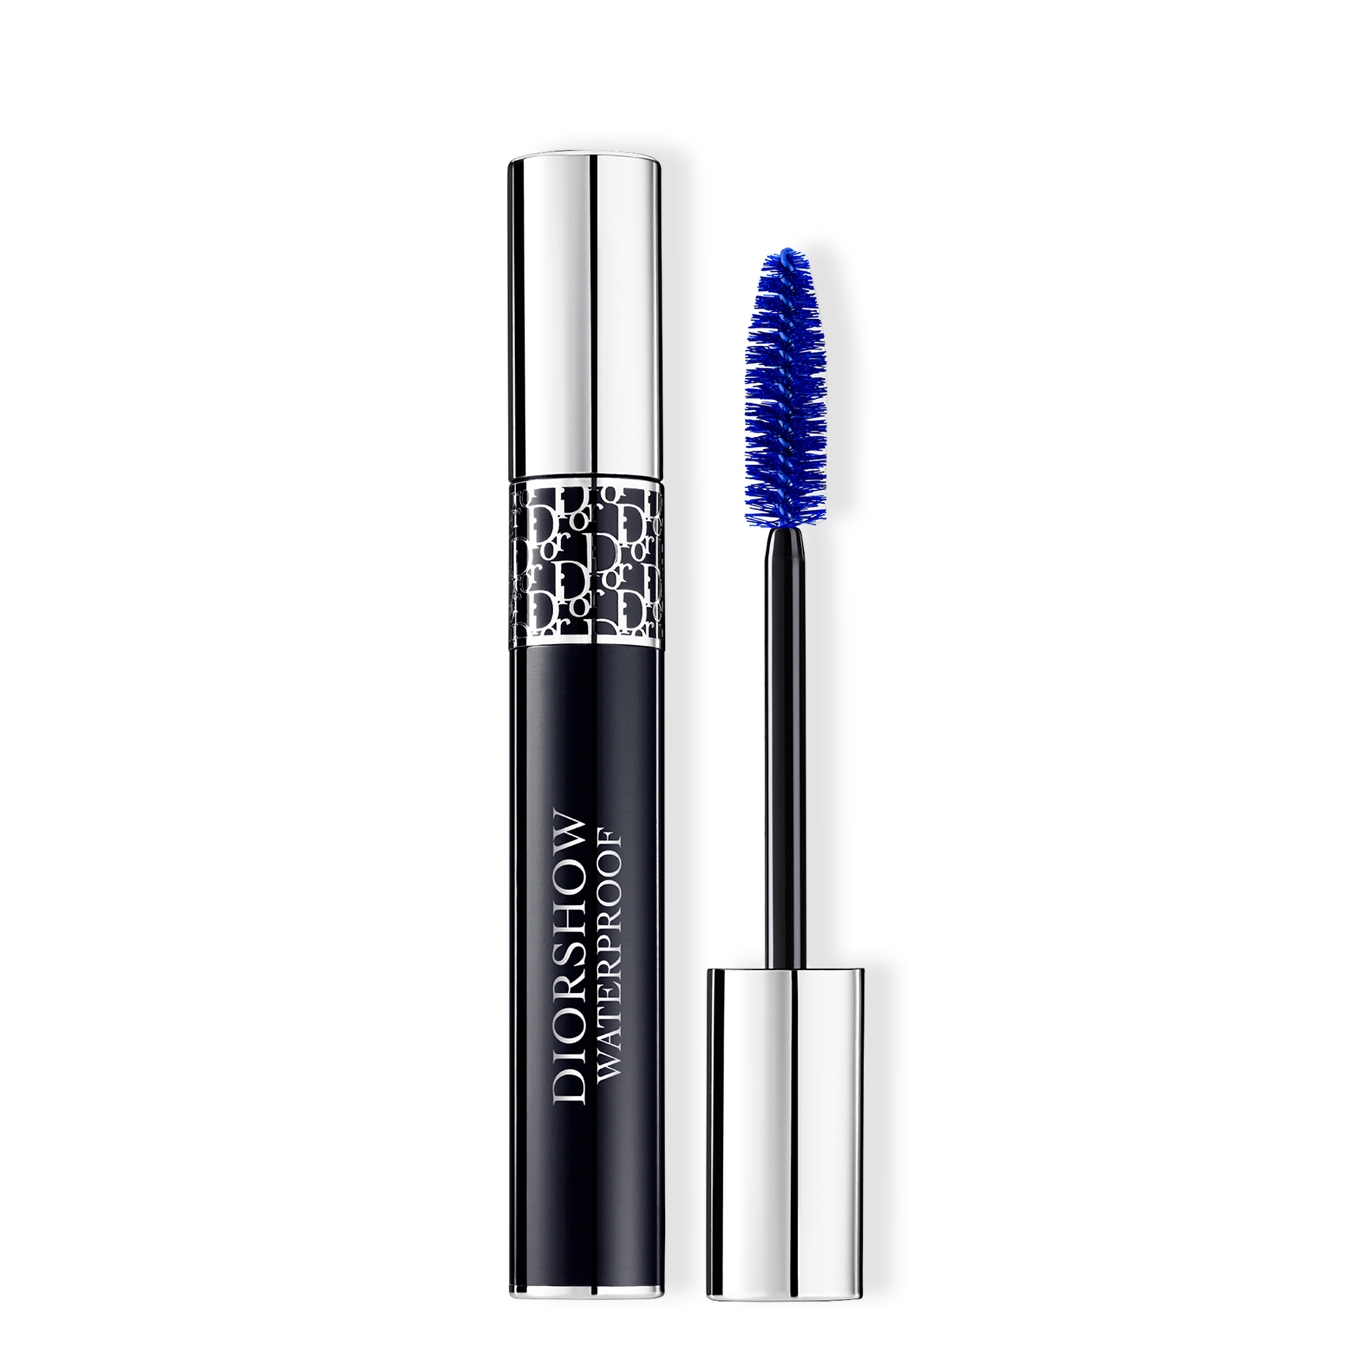 Dior Diorshow Waterproof Mascara - Colour 258 Catwalk Blue